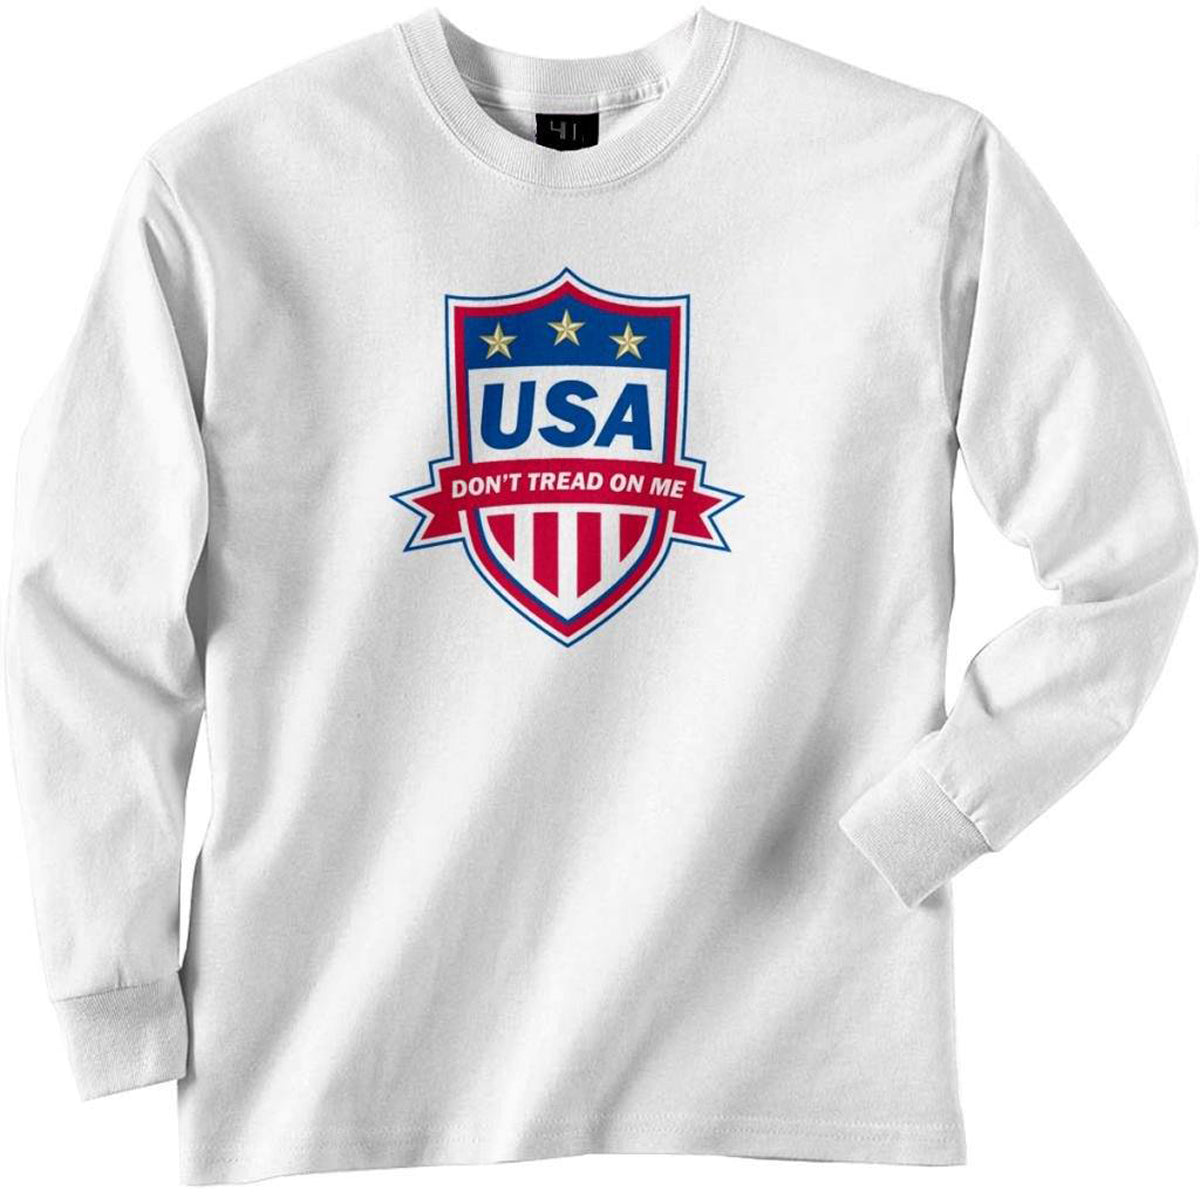 USA Don't Tread on Me Soccer Badge Printed Long Sleeve Tee T-shirts 411 Youth Medium White 